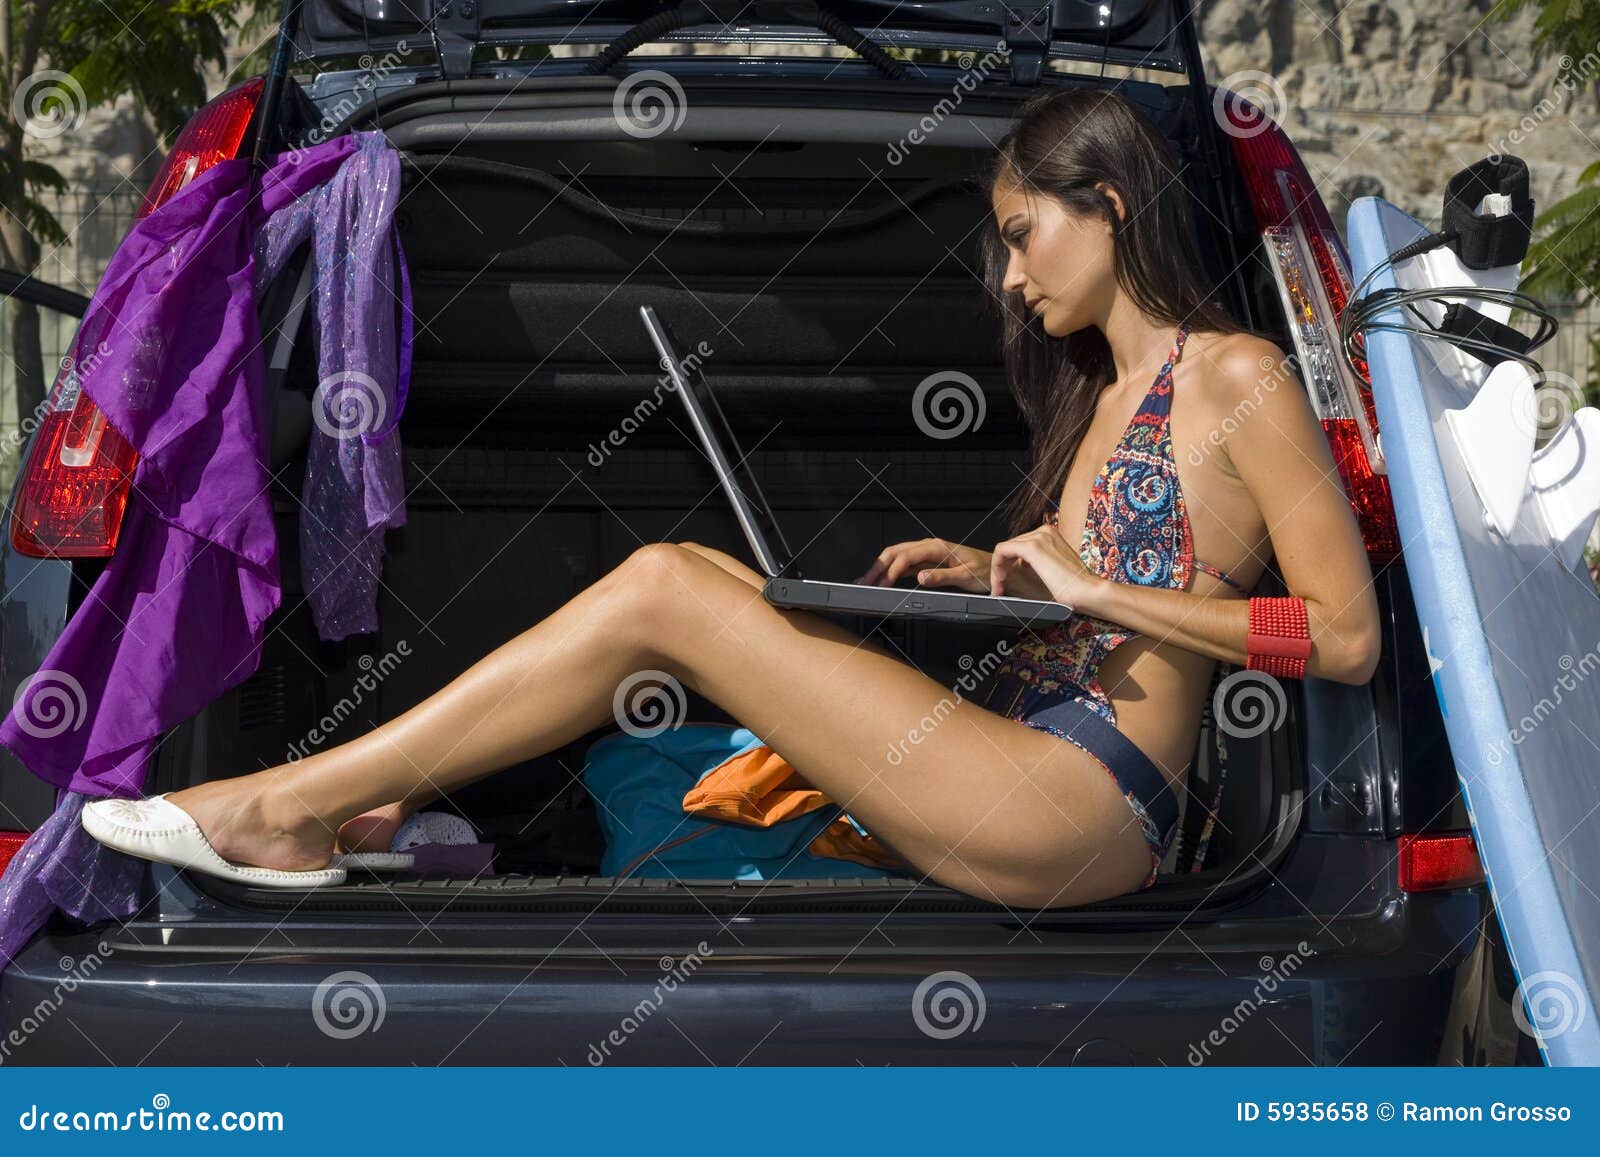 woman on car